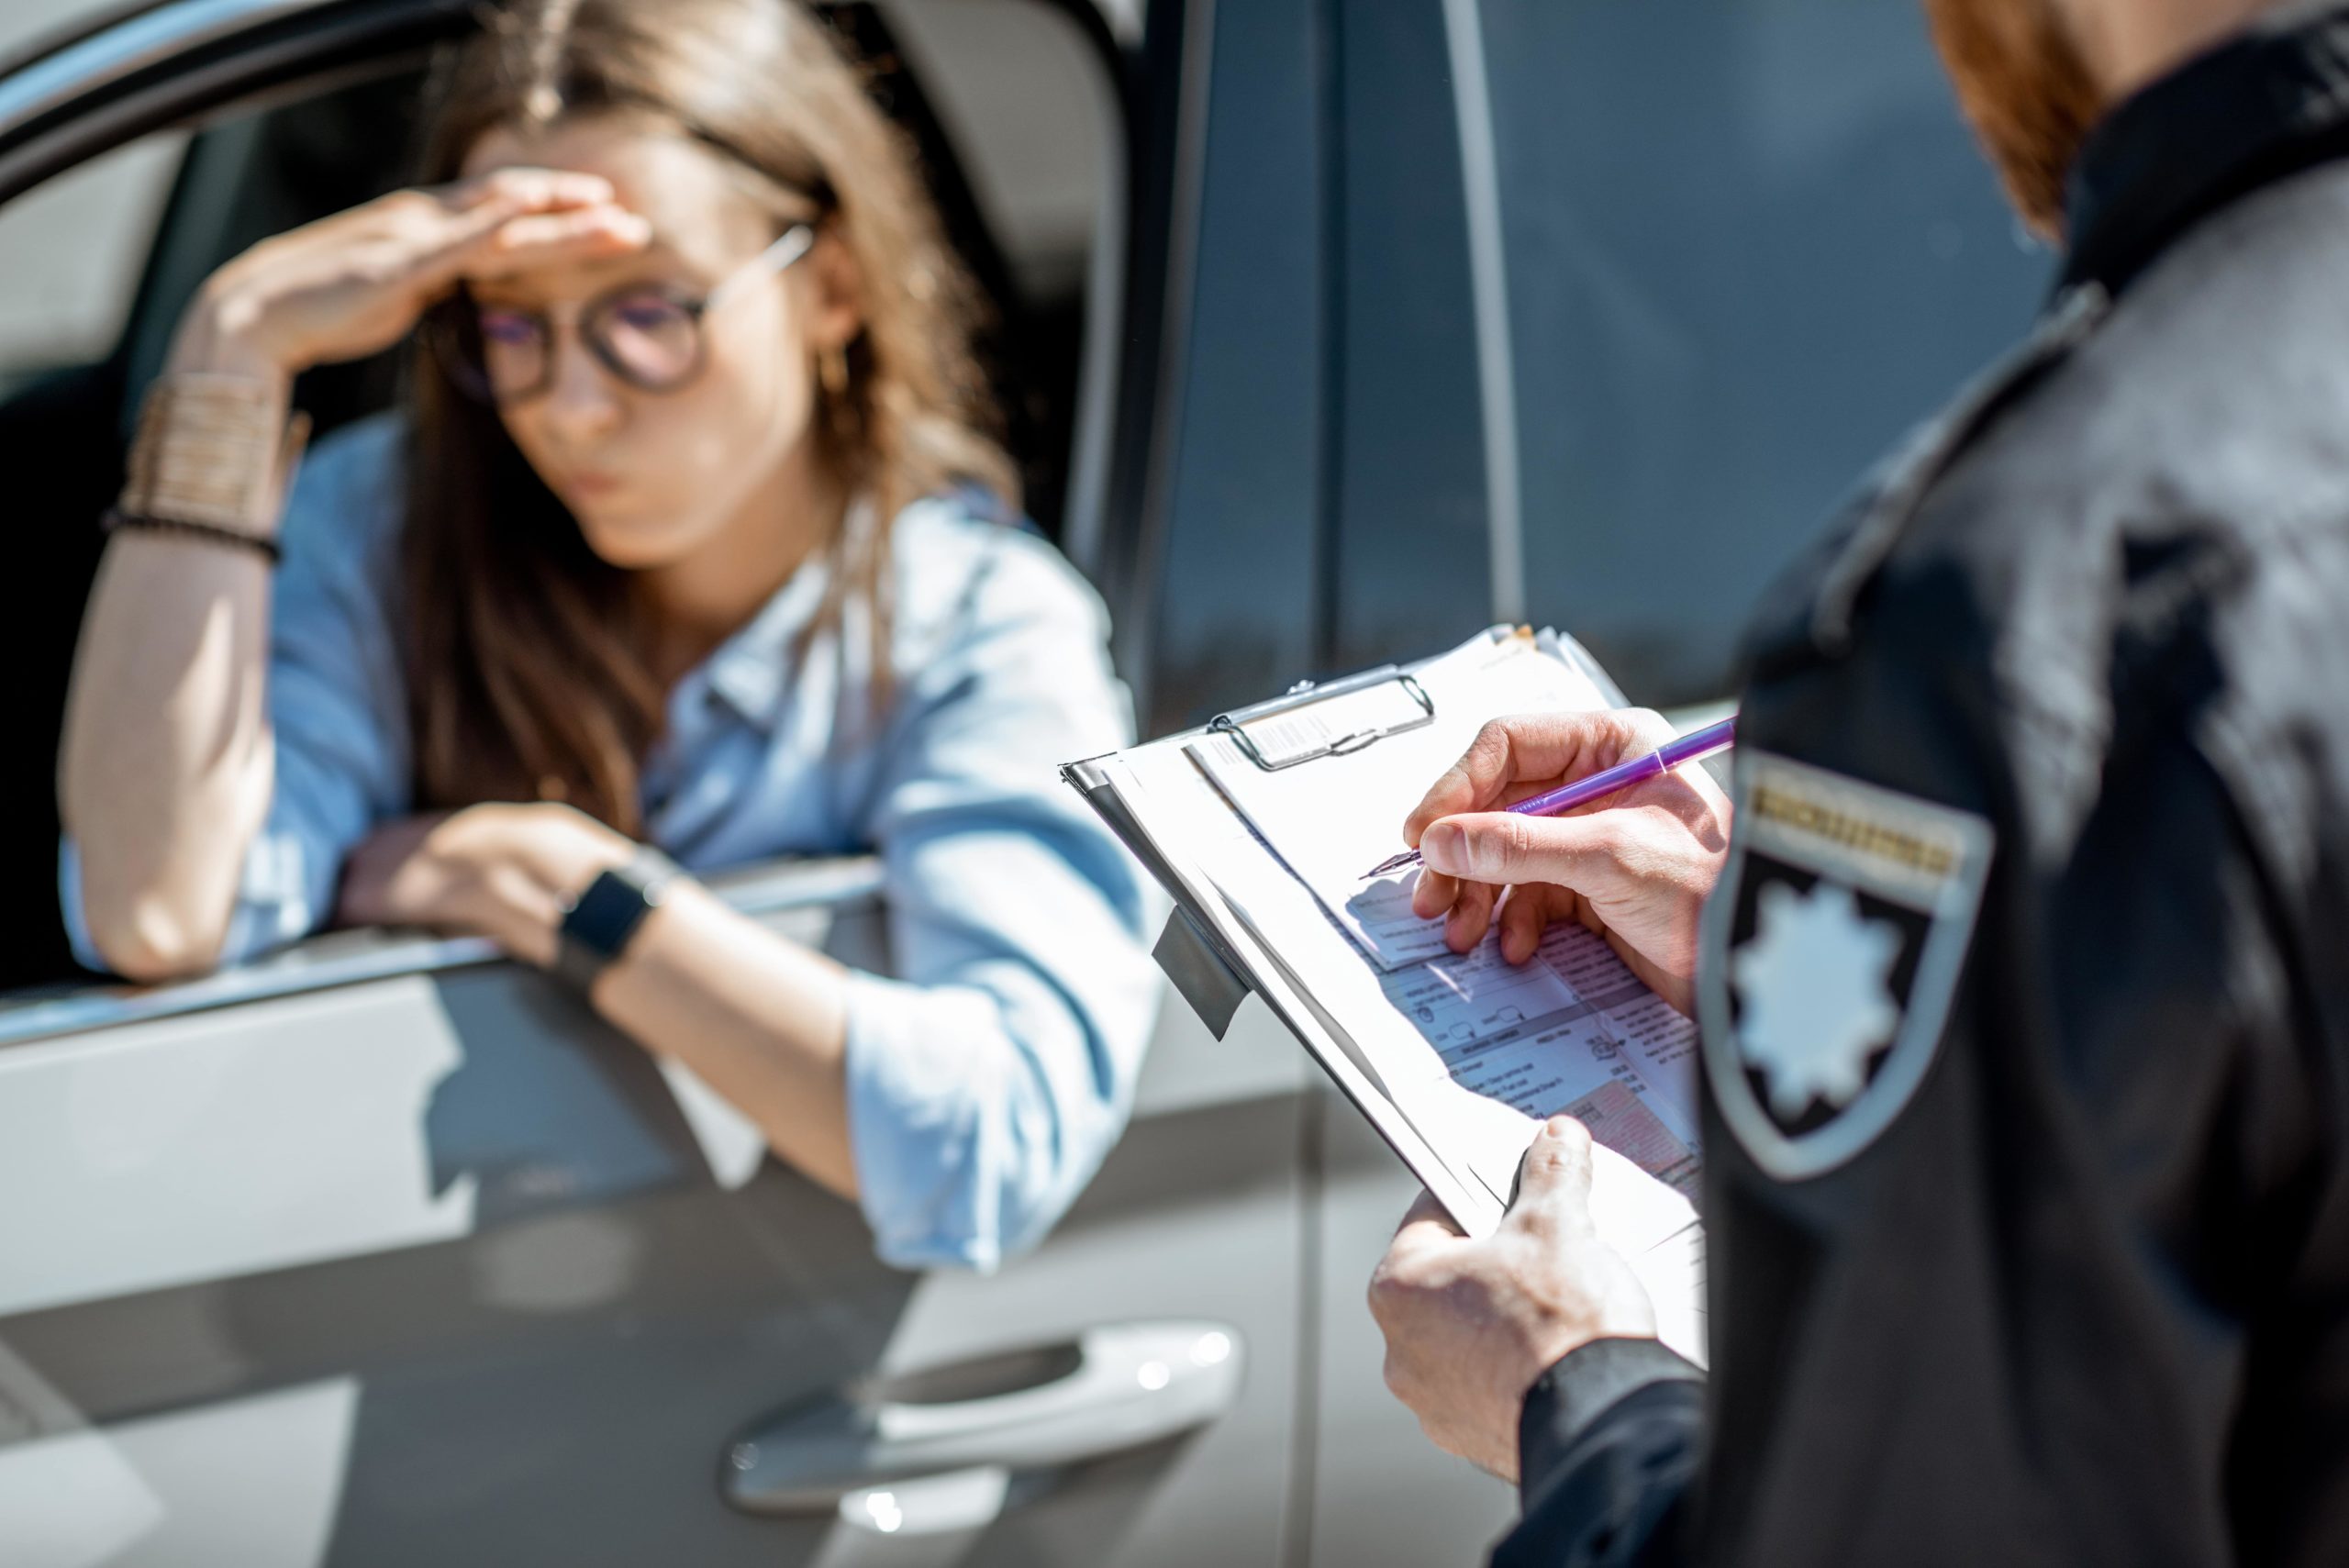 A woman receives a traffic citation